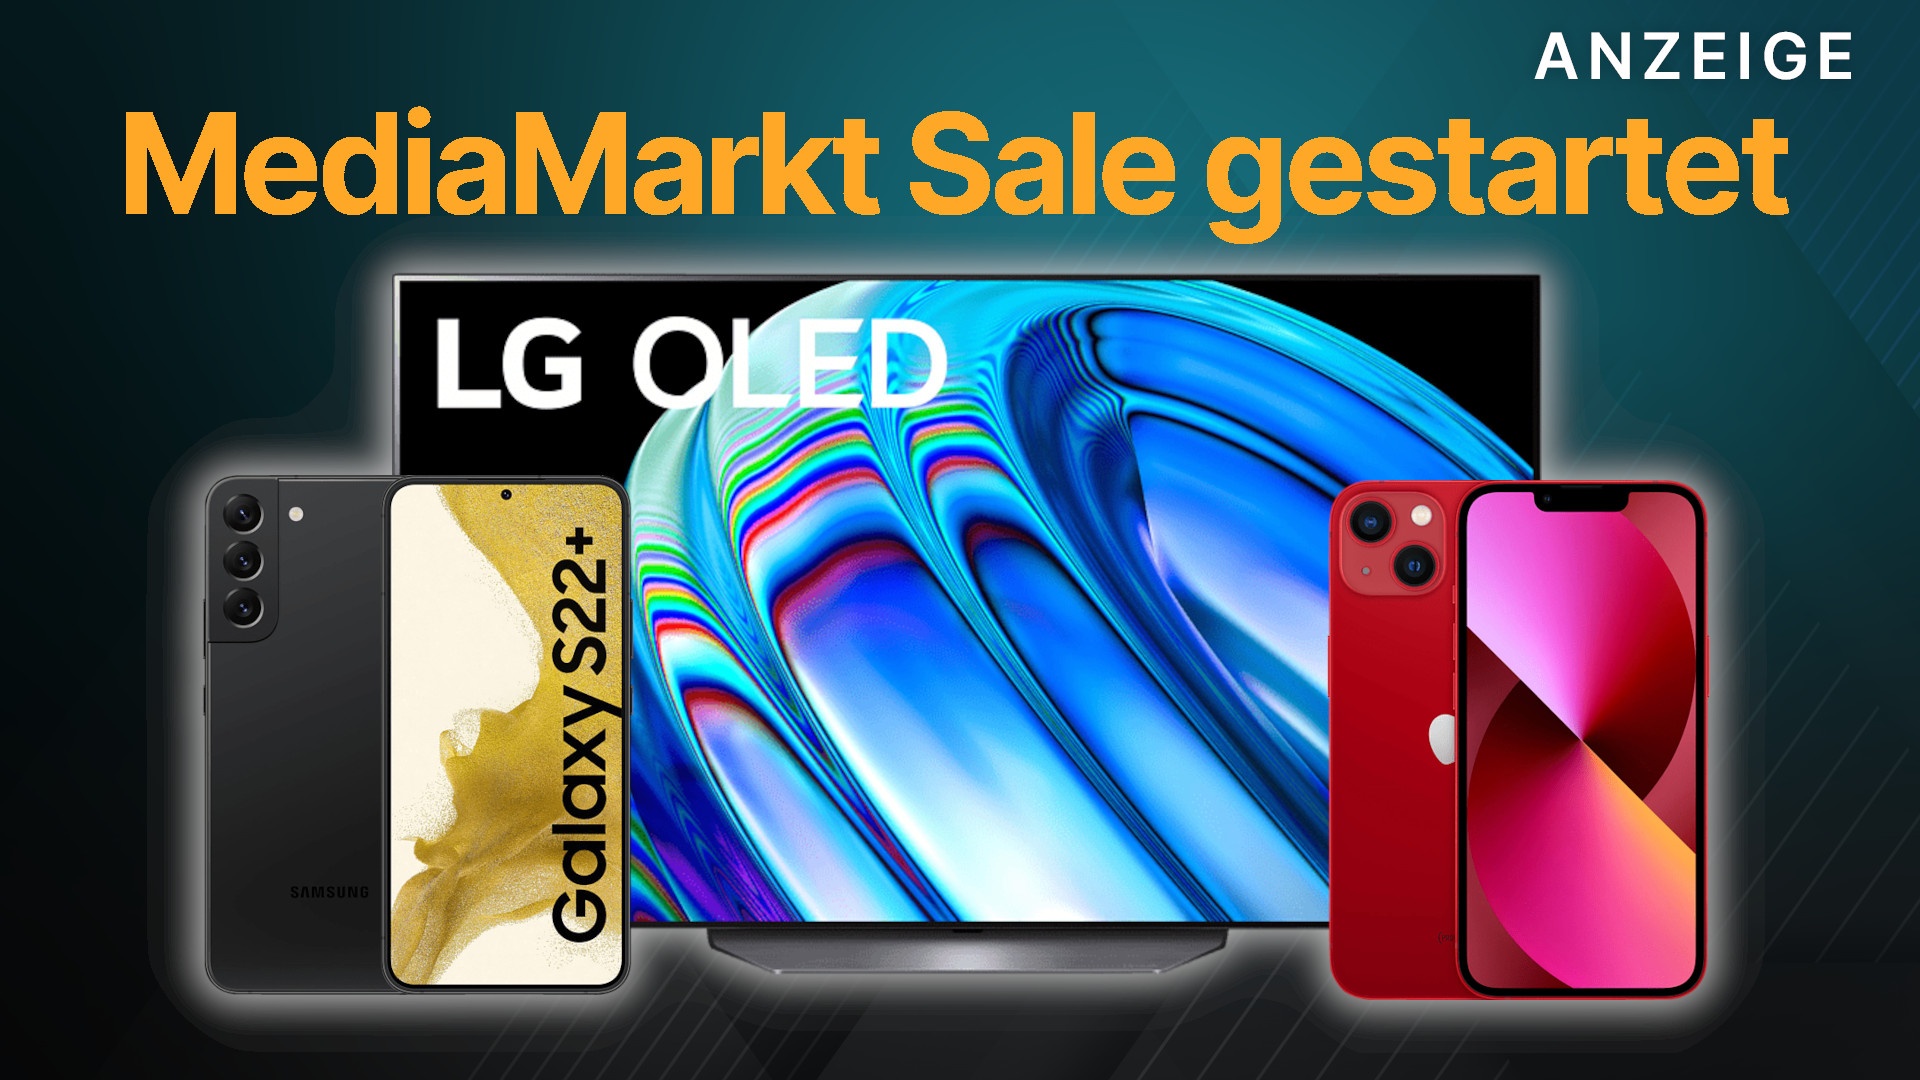 morfine zingen draagbaar Neuer Sale bei MediaMarkt: LG OLED TV mit 55 Zoll, Apple iPhones & Samsung  Handys günstig